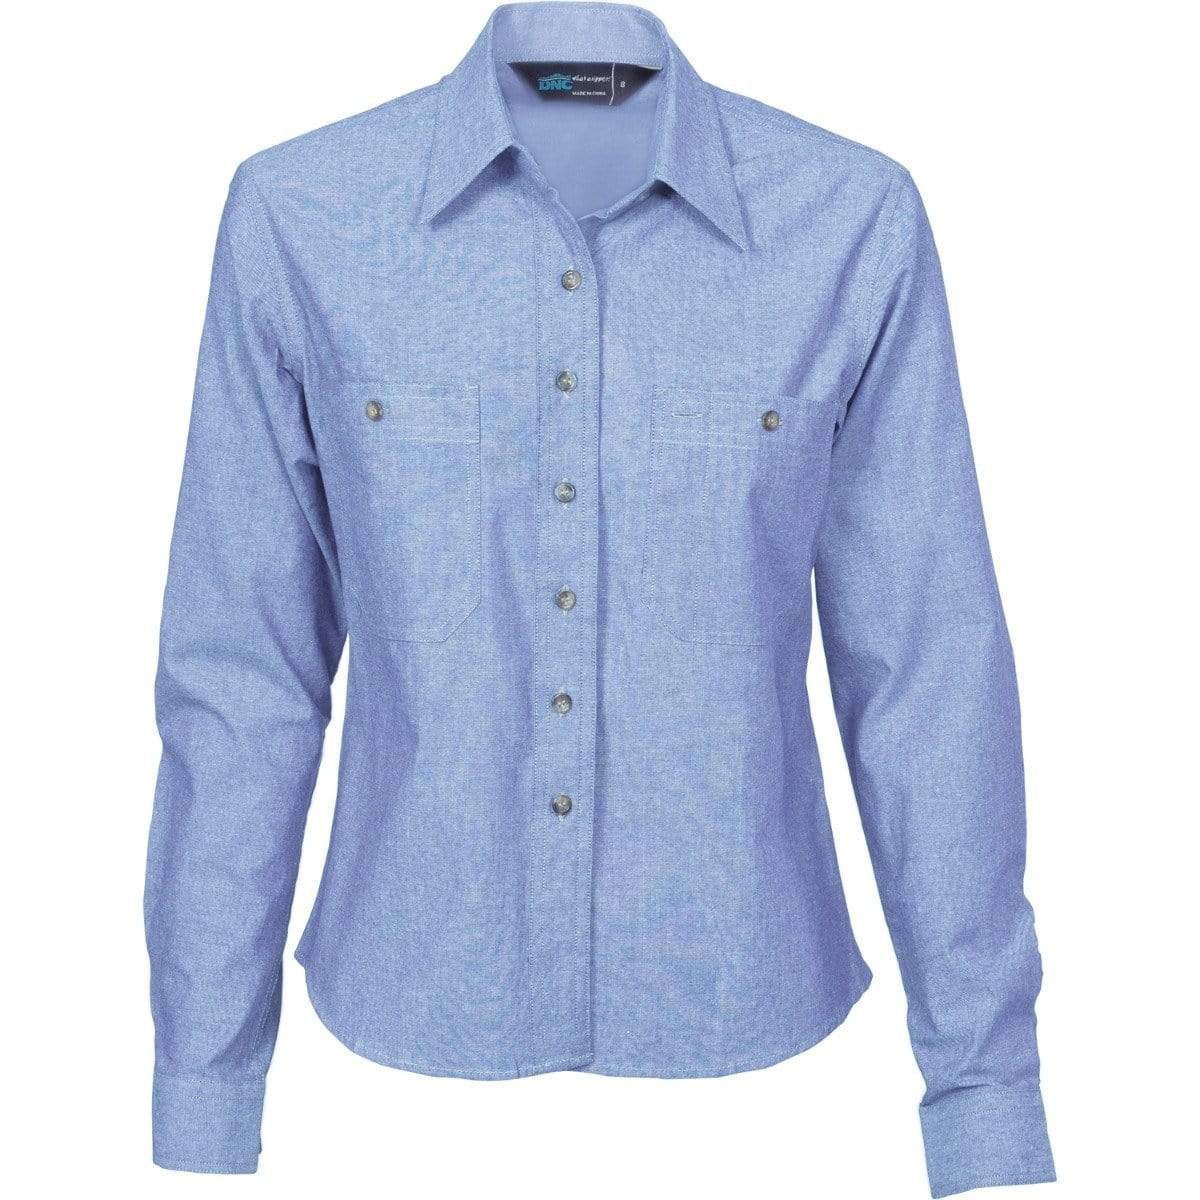 Dnc Workwear Women’s Cotton Chambray Shirt - Long Sleeve - 4106 Work Wear DNC Workwear Chambray 12 